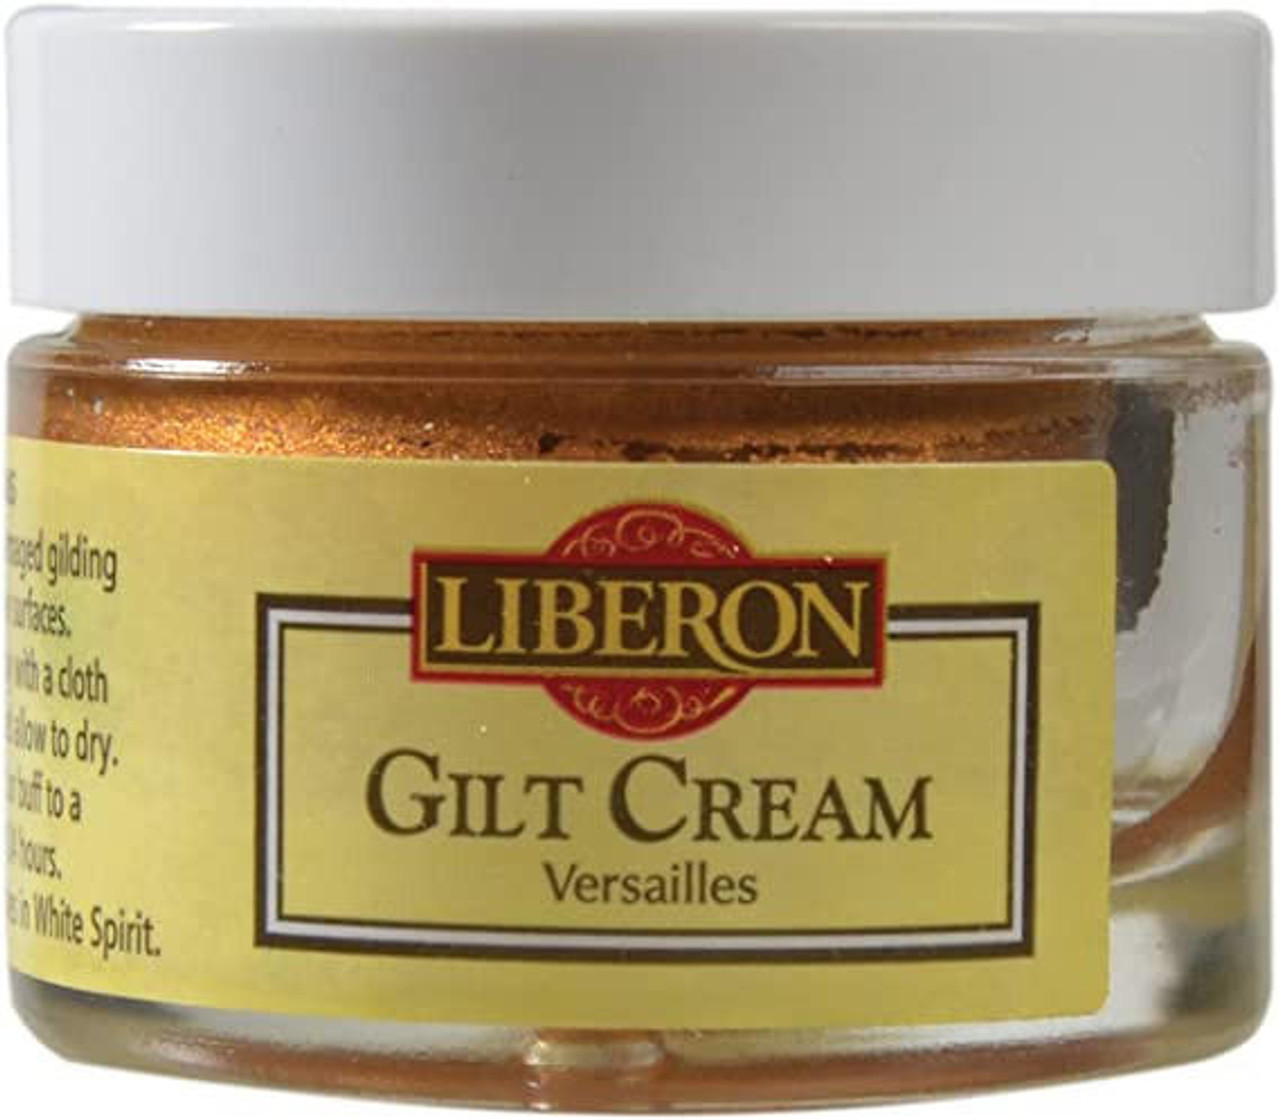 Liberon Gilt Cream - Rambouillet - 30mL